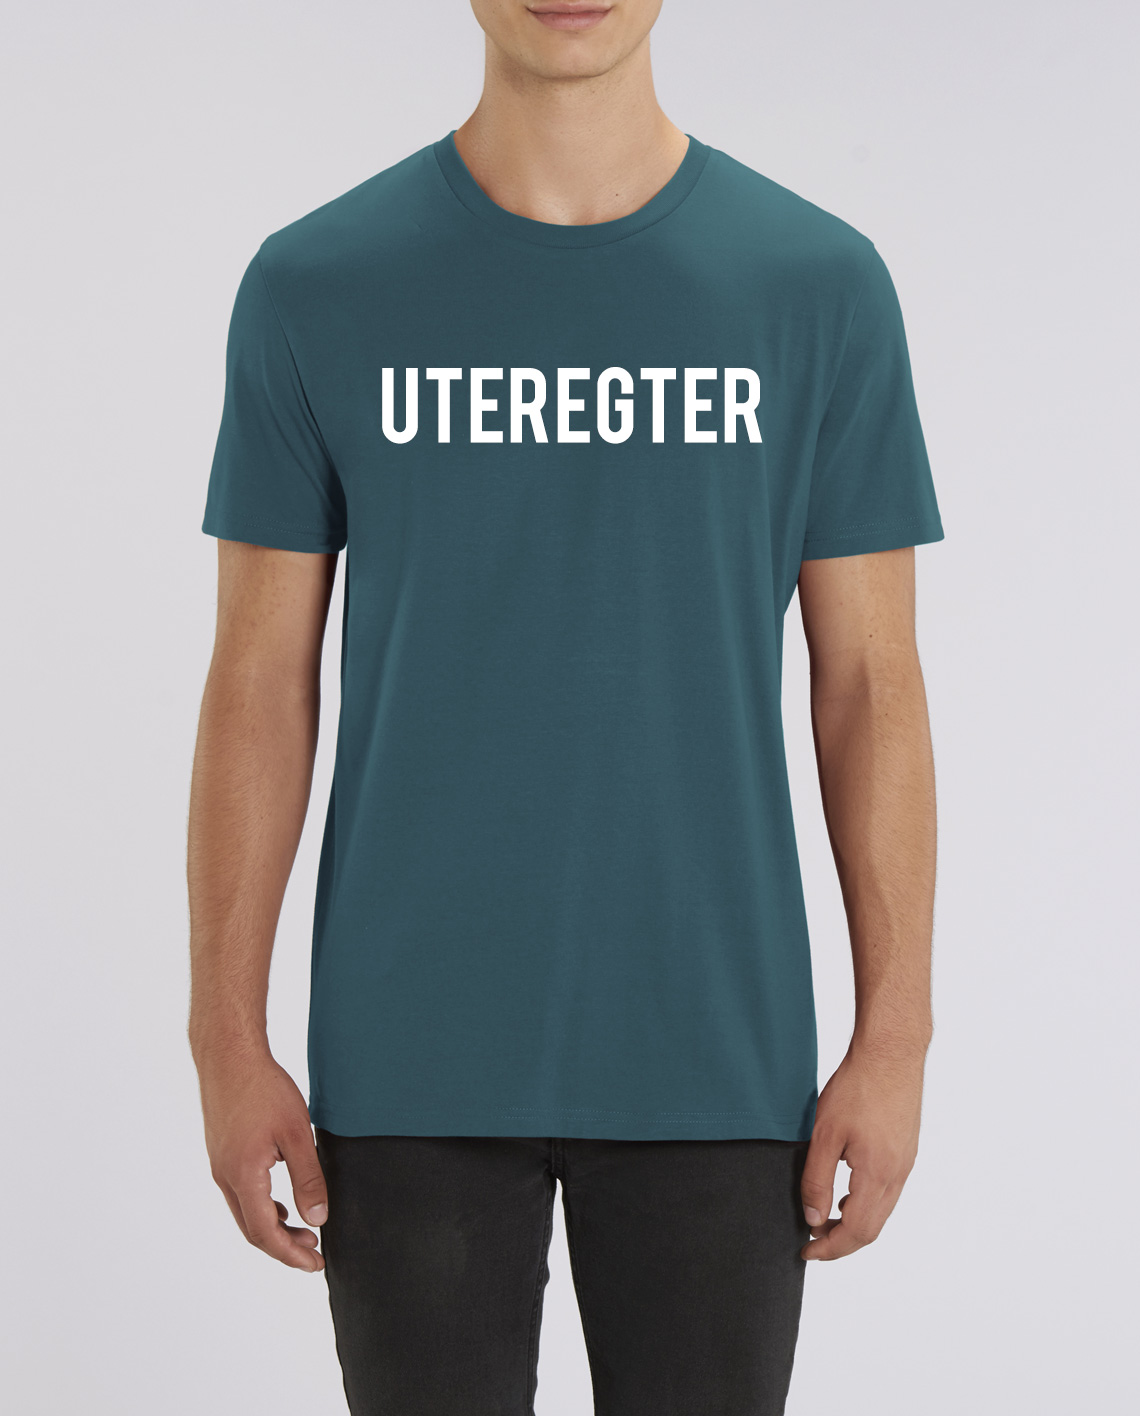 gegevens talent Toegeven T-Shirt Uteregter - Intdialect